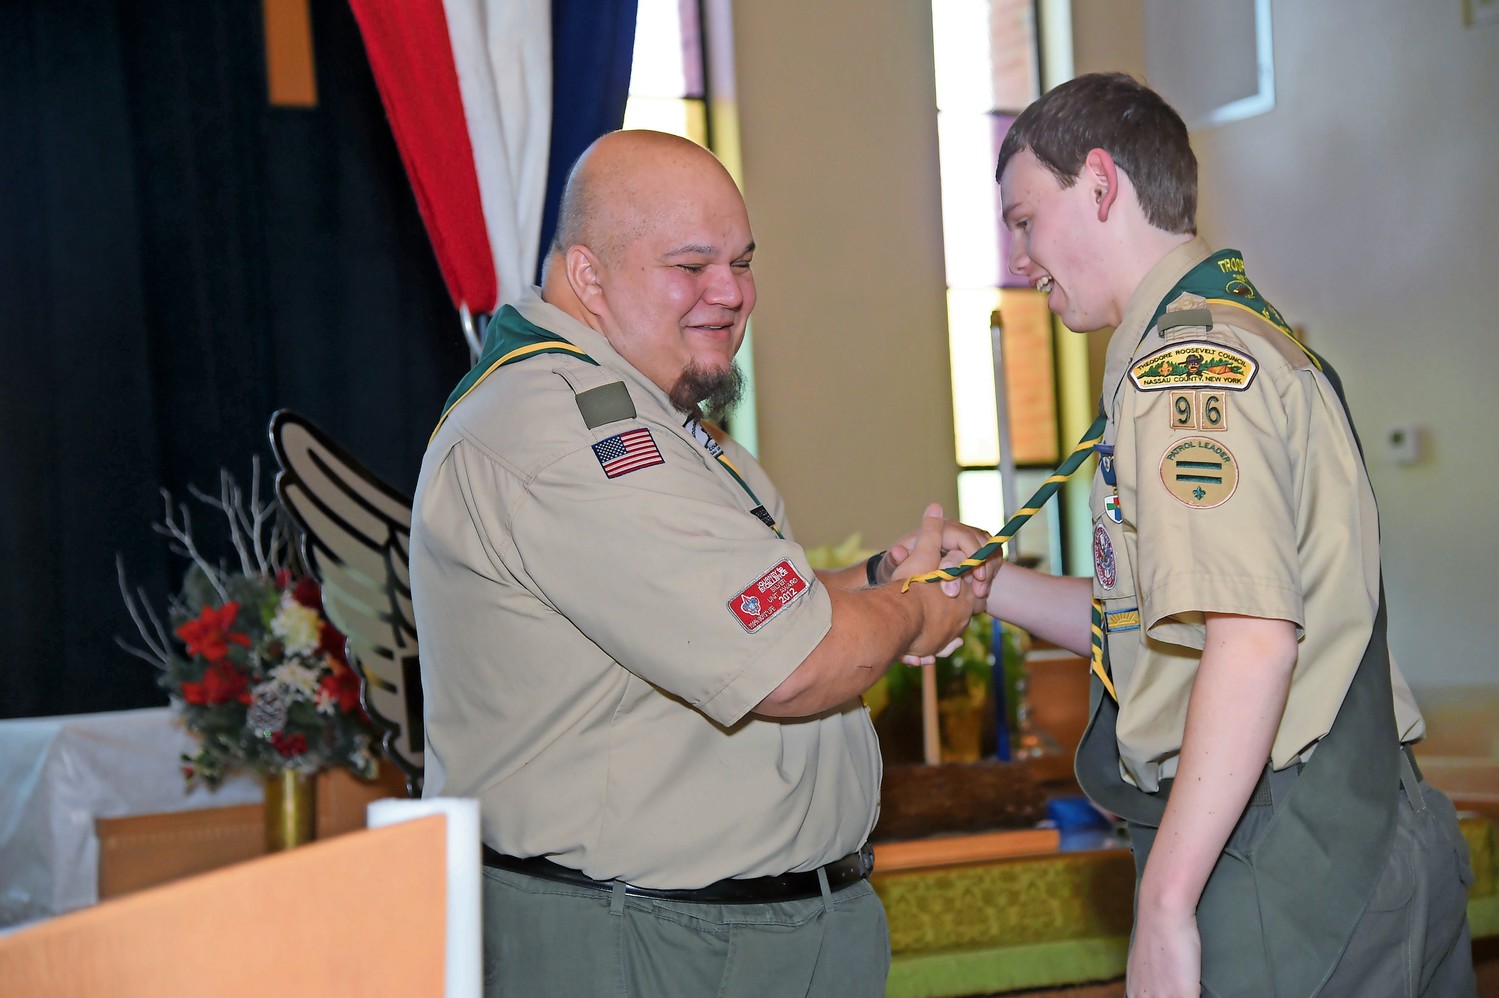 Parola thanked Troop 96 Assistant Scoutmaster Anthony Fillizola, left, after Fillizola spoke of Parola’s journey to Eagle Scout.